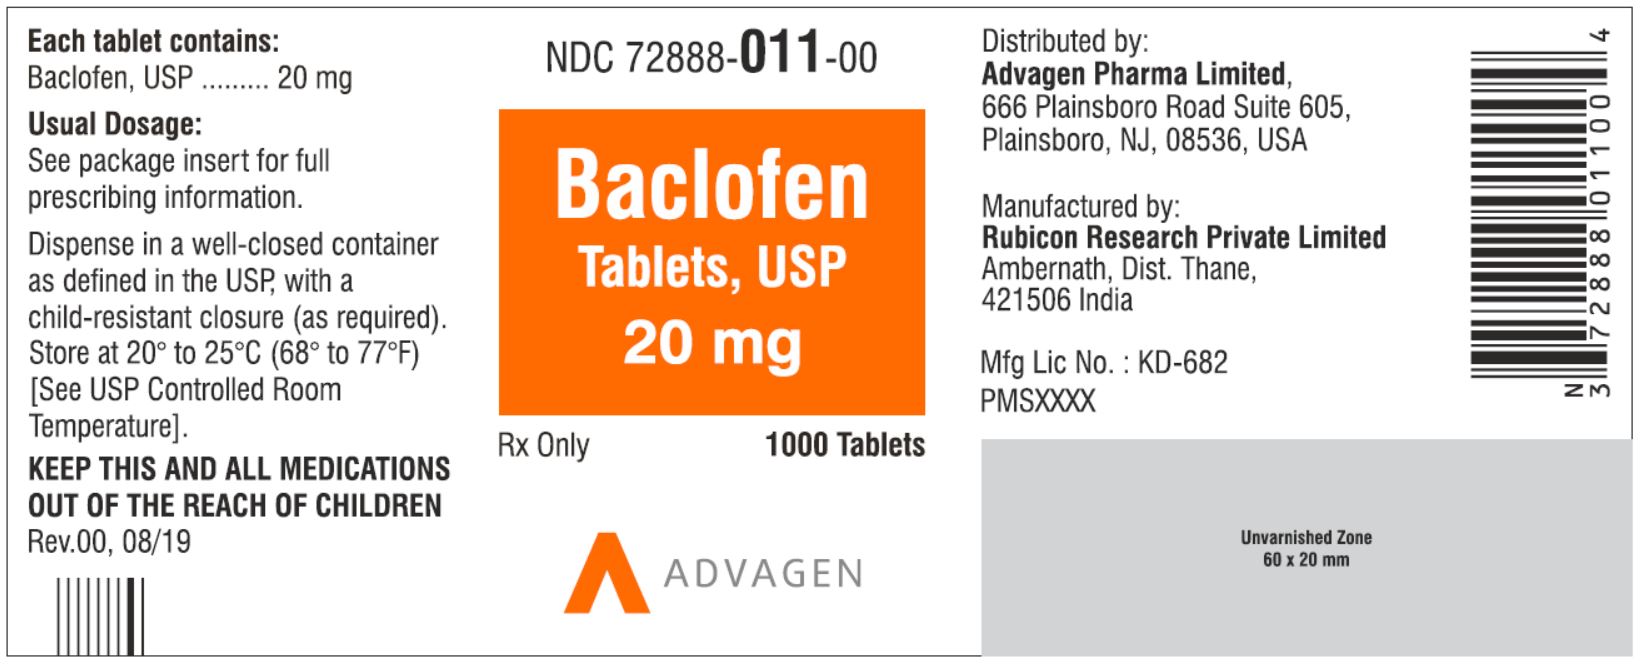 NDC: <a href=/NDC/72888-011-00>72888-011-00</a> - Baclofen Tablets, USP 20 mg - 1000 Tablets